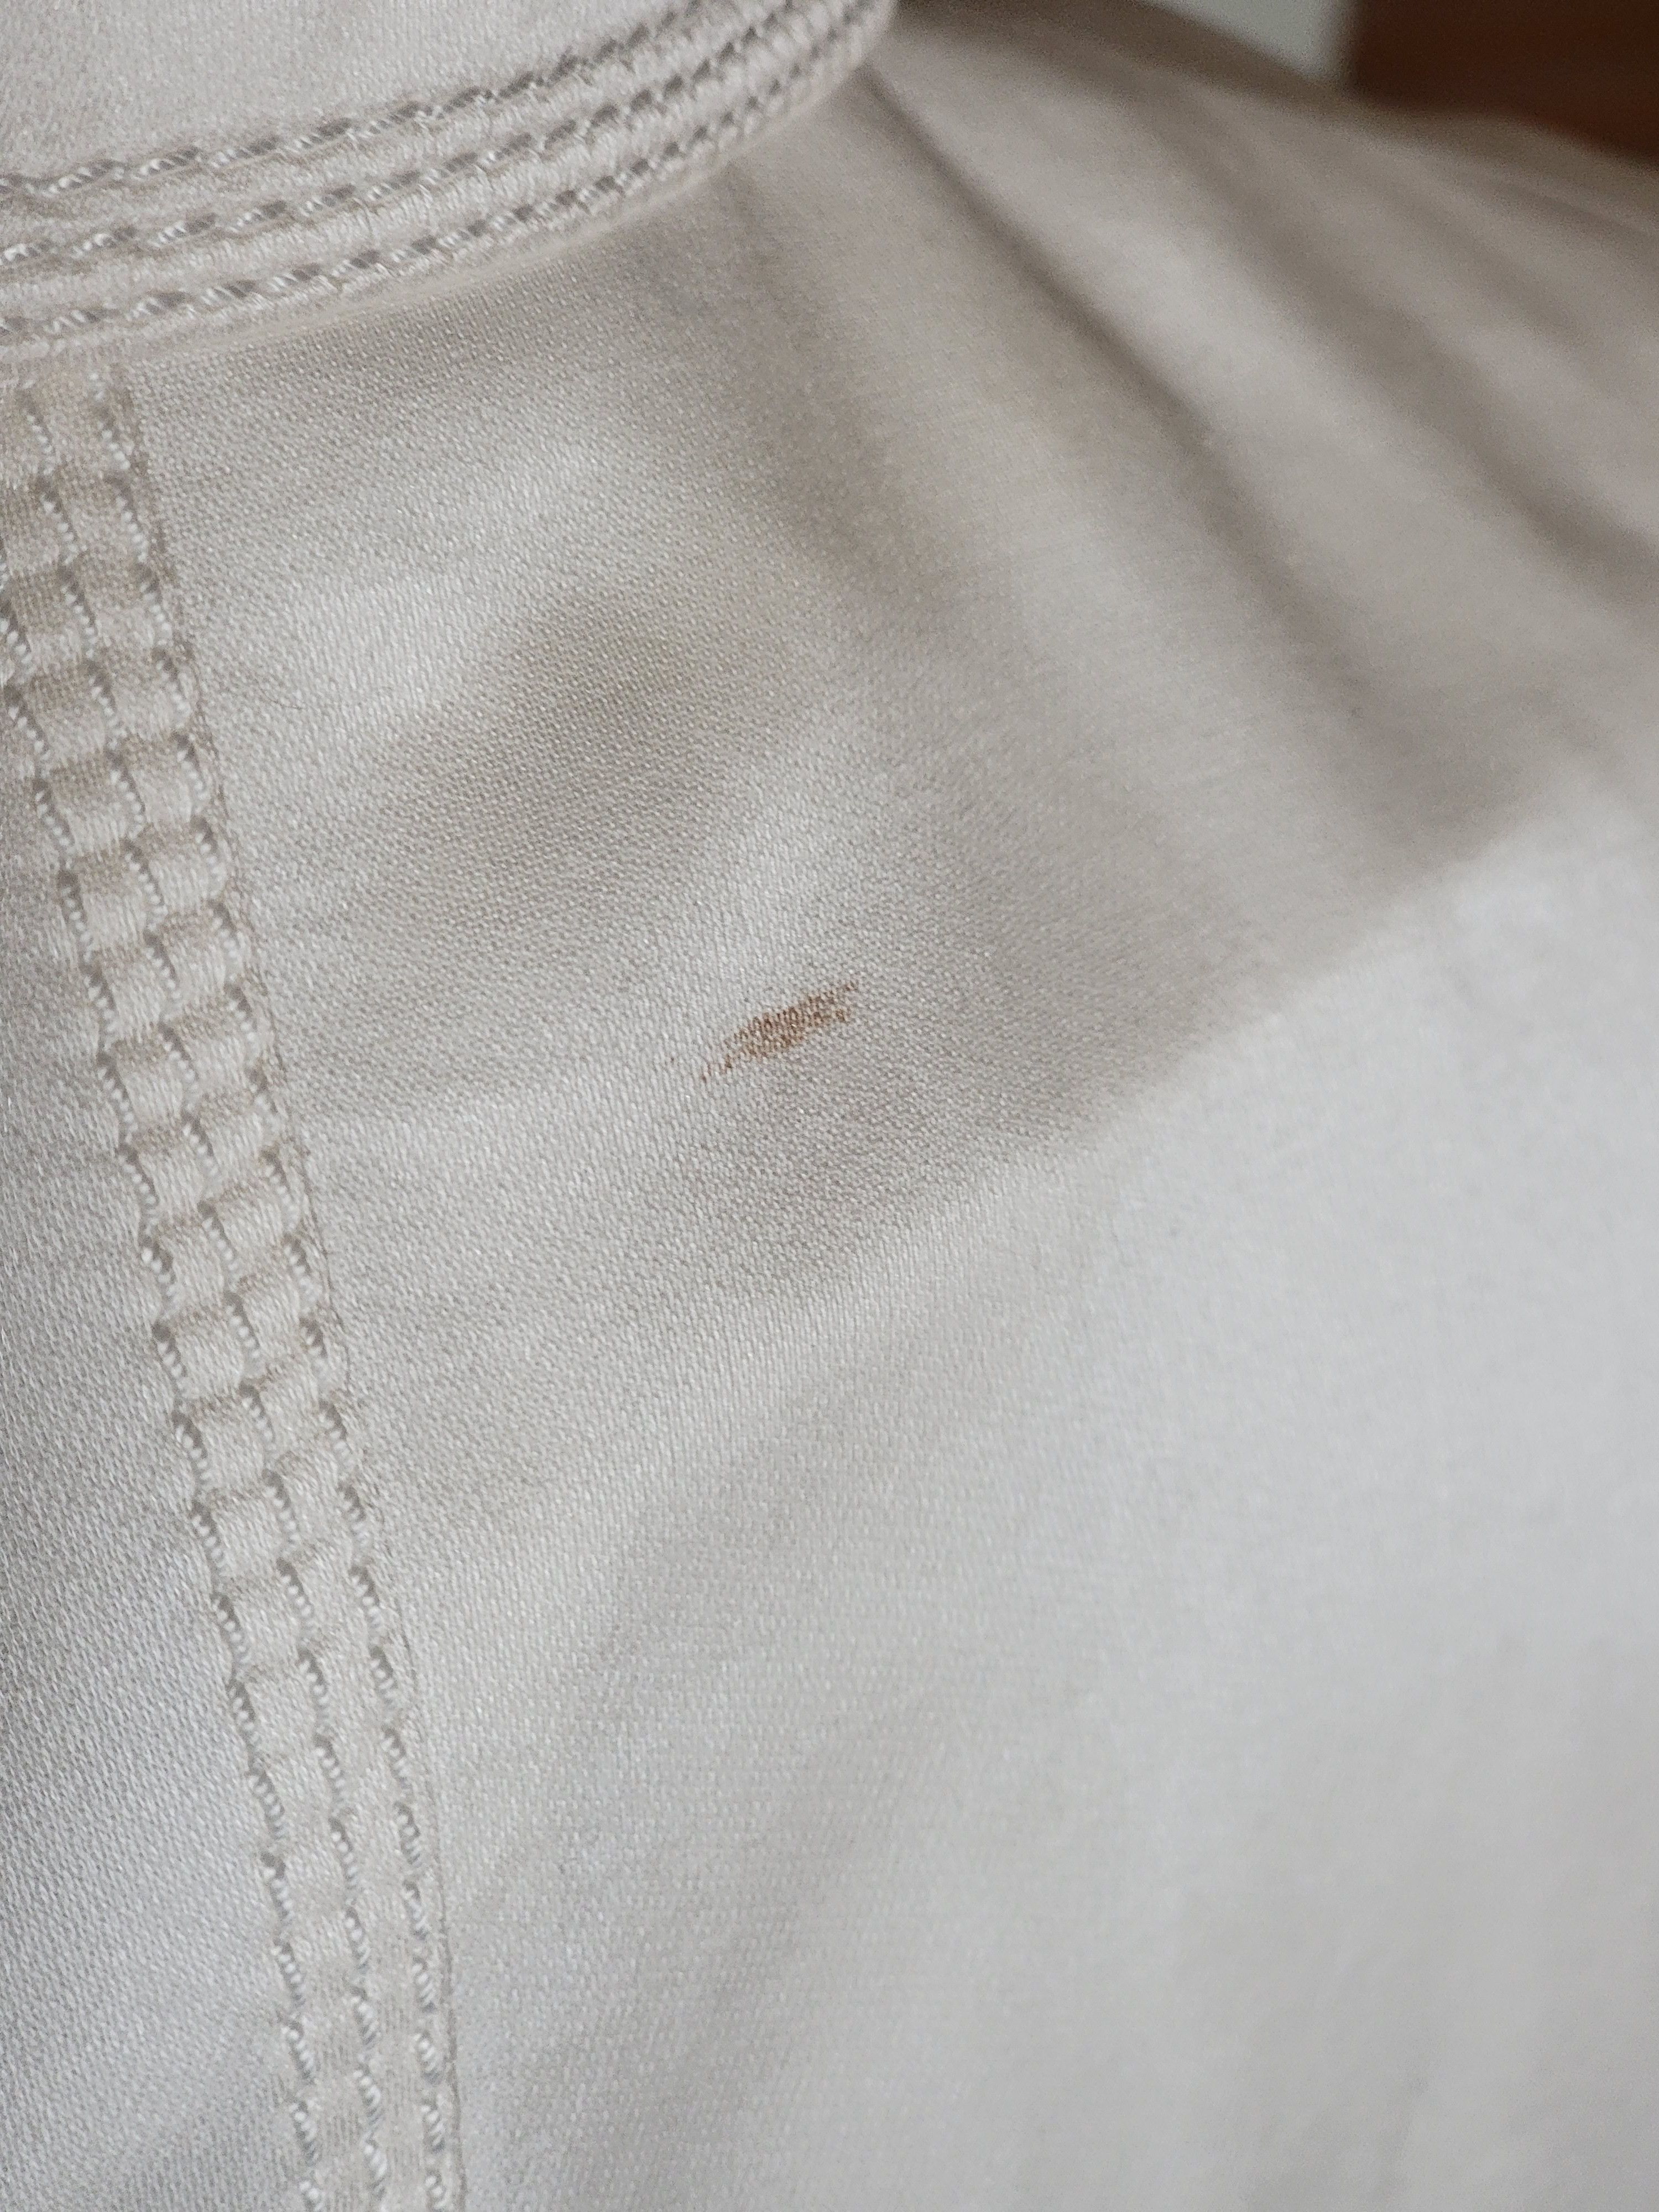 Ann Demeulemeester SS 2011 Ann D white silk cotton blazer size S Size 38R - 3 Thumbnail